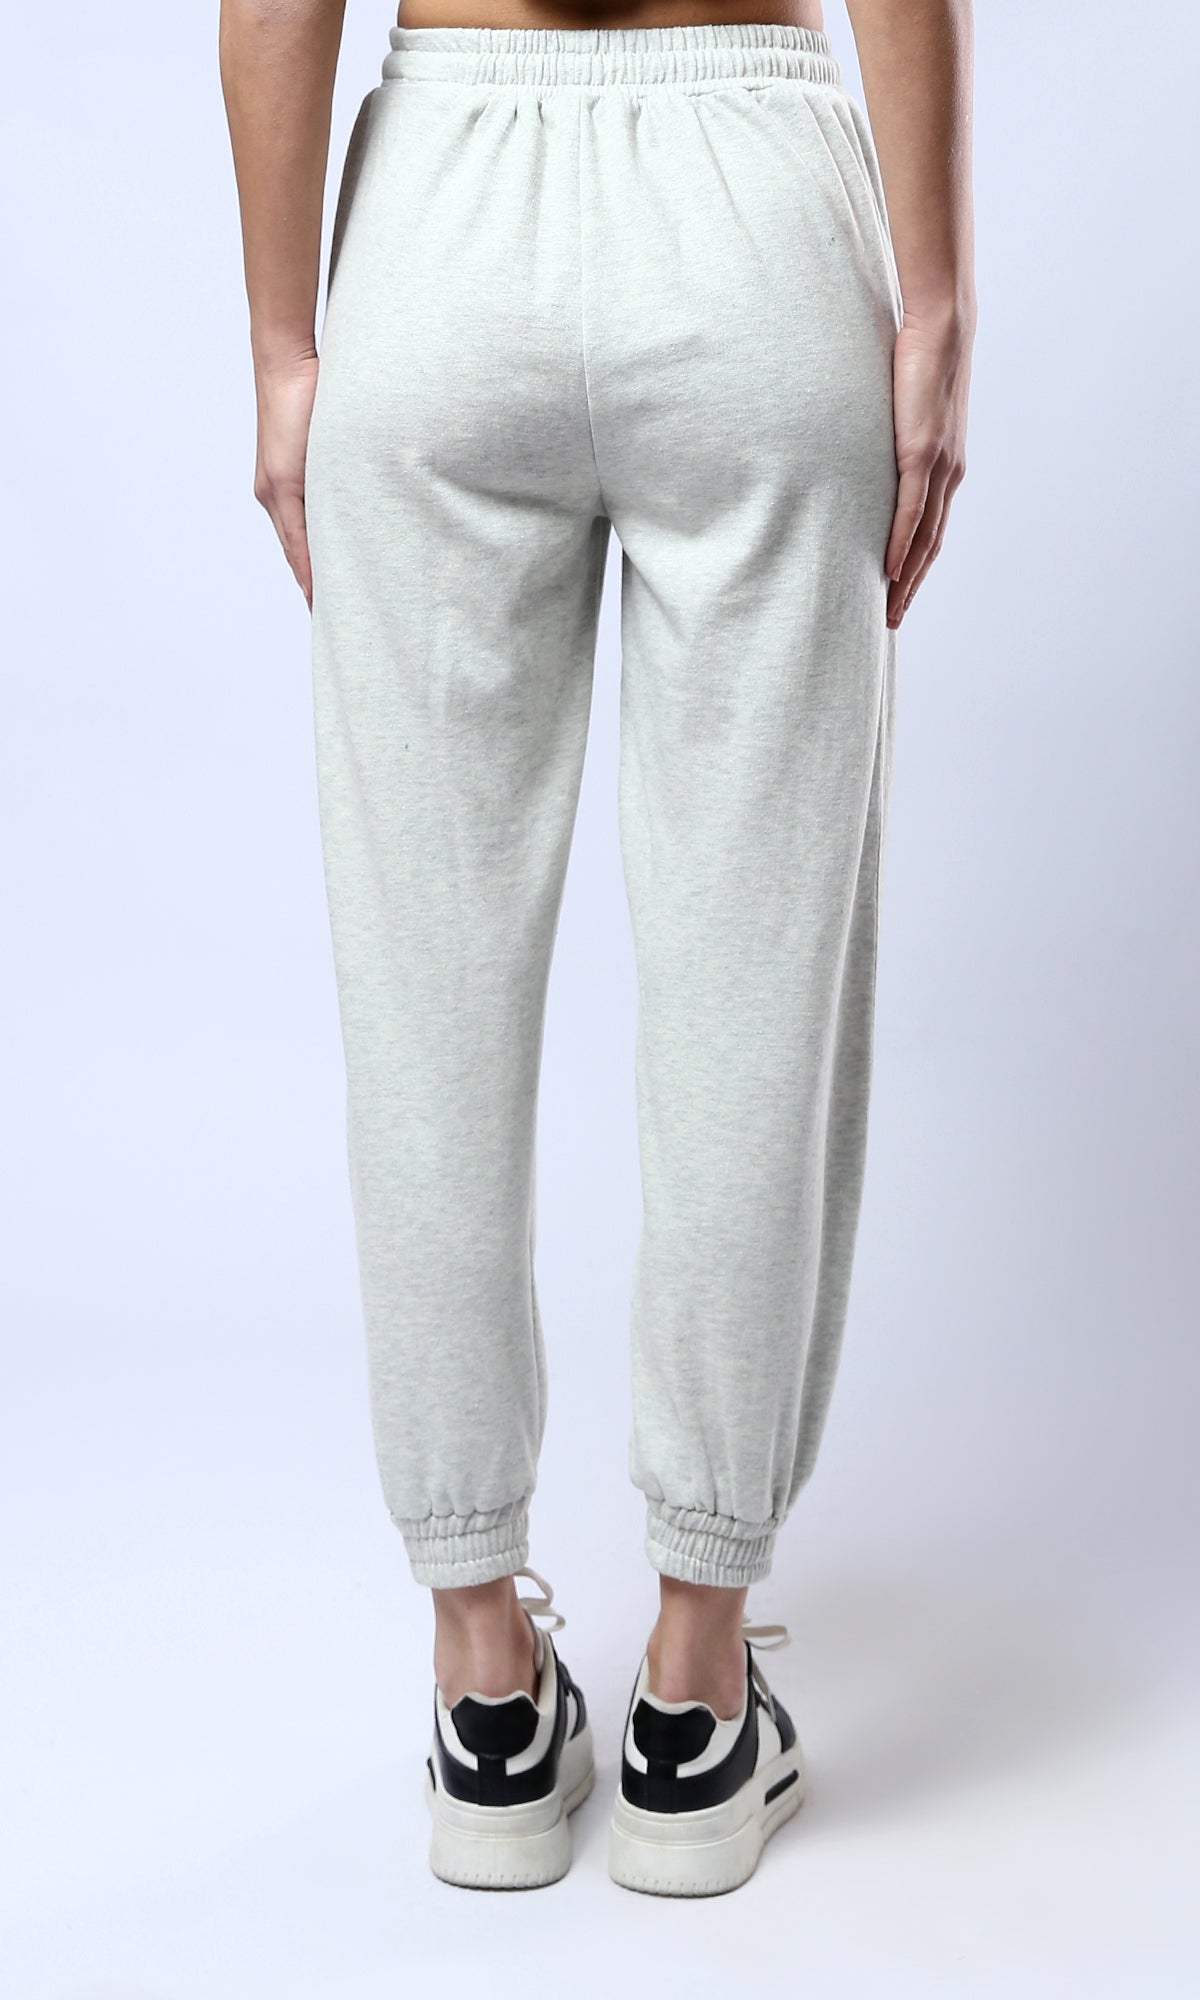 O179811 Heather Light Grey Comfy Cotton Jogger Pants